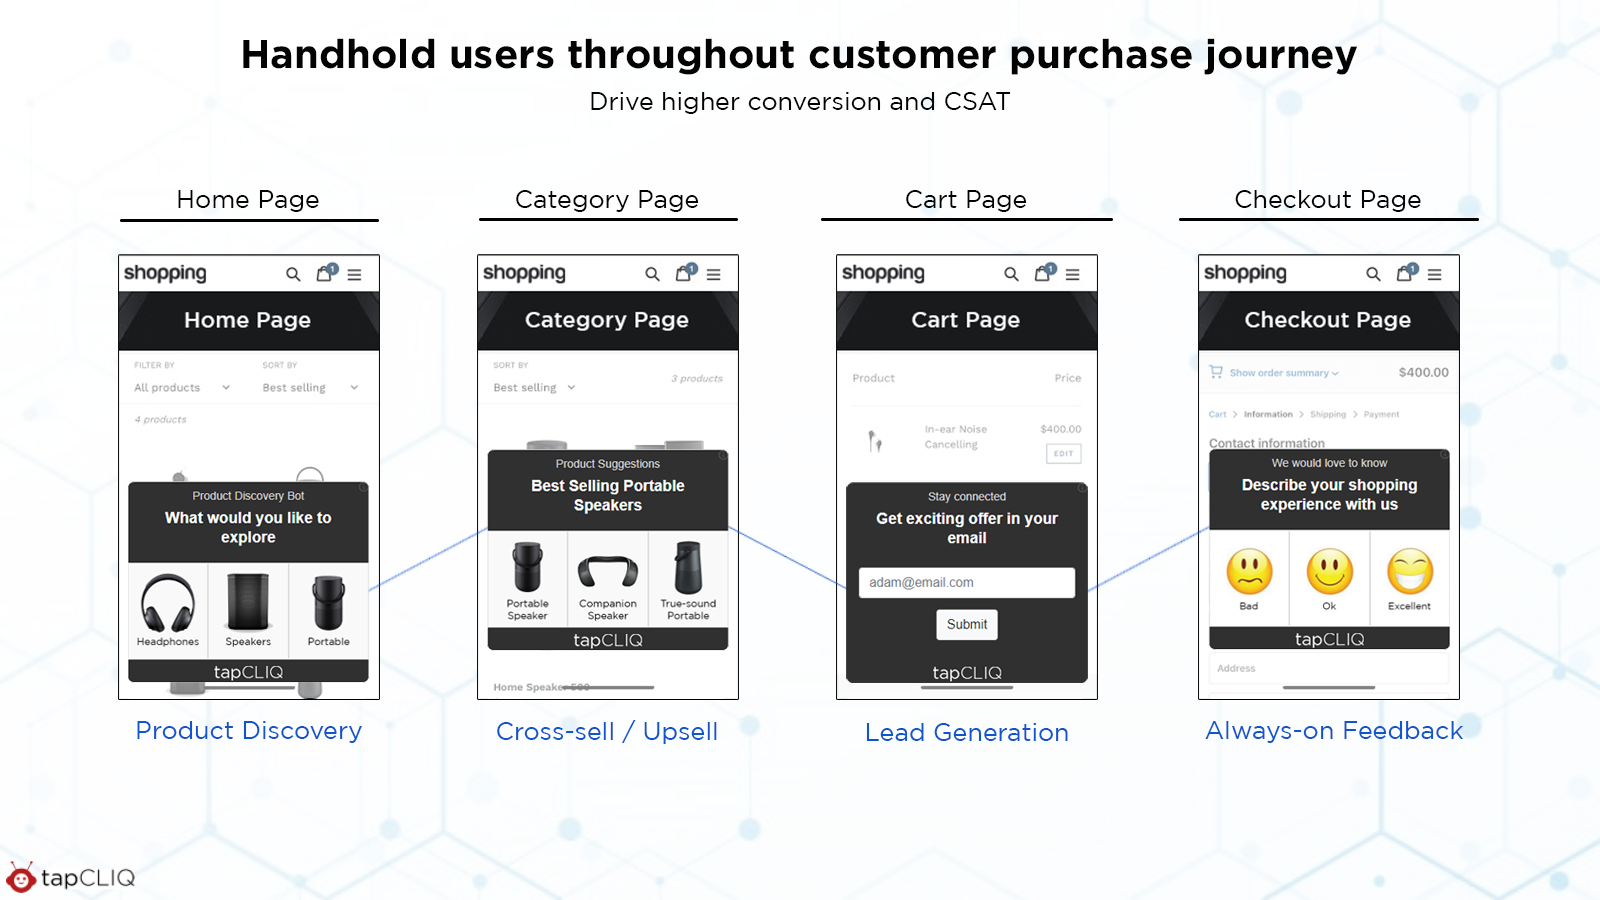 Hand-hold users across customer journey